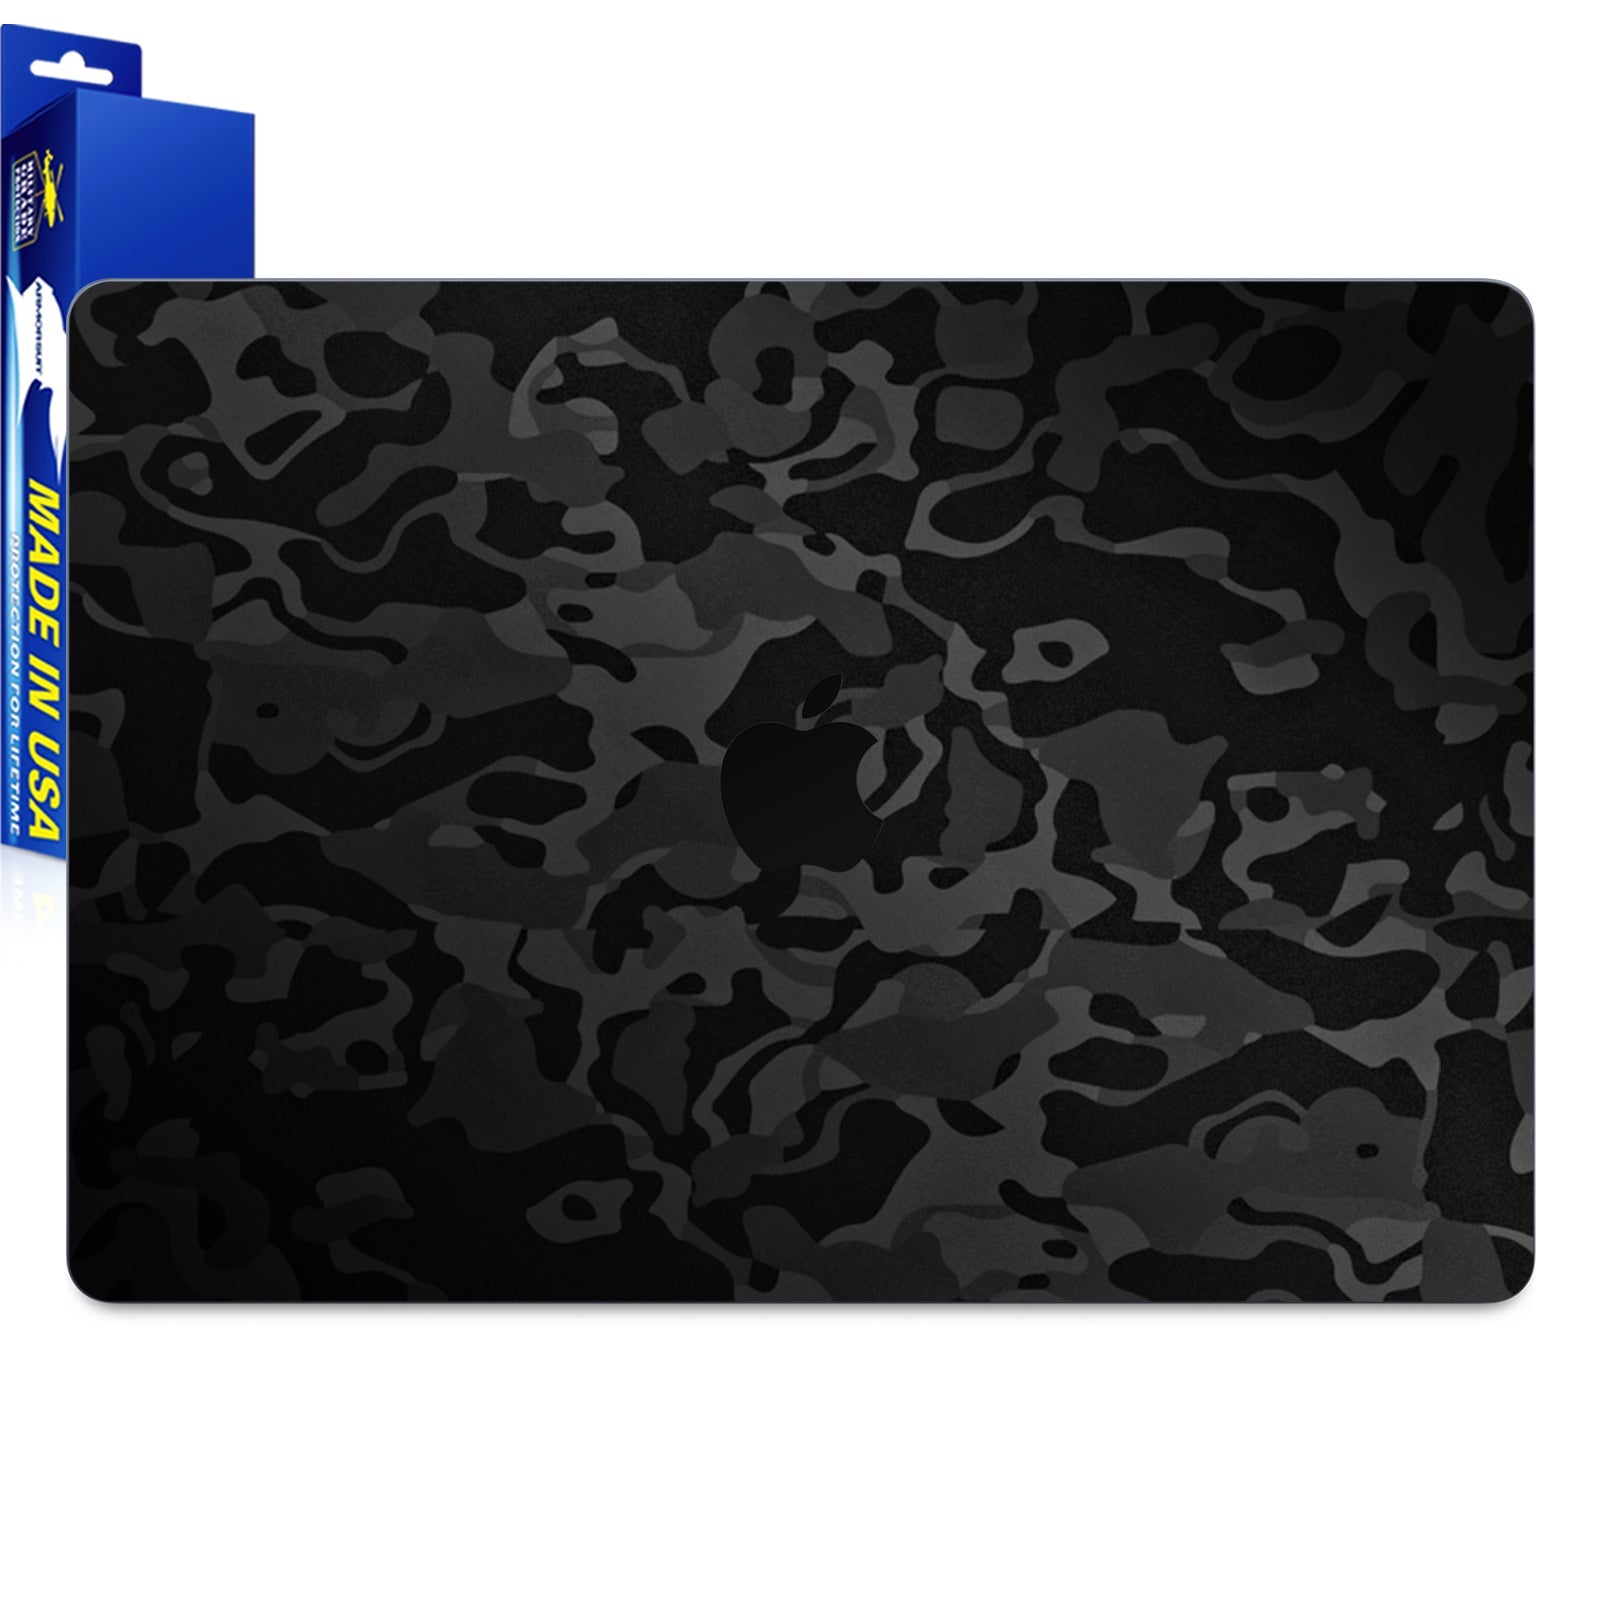 Armorsuit MilitaryShield Skin Wrap Film for Macbook Air M3 15 inch (2024)